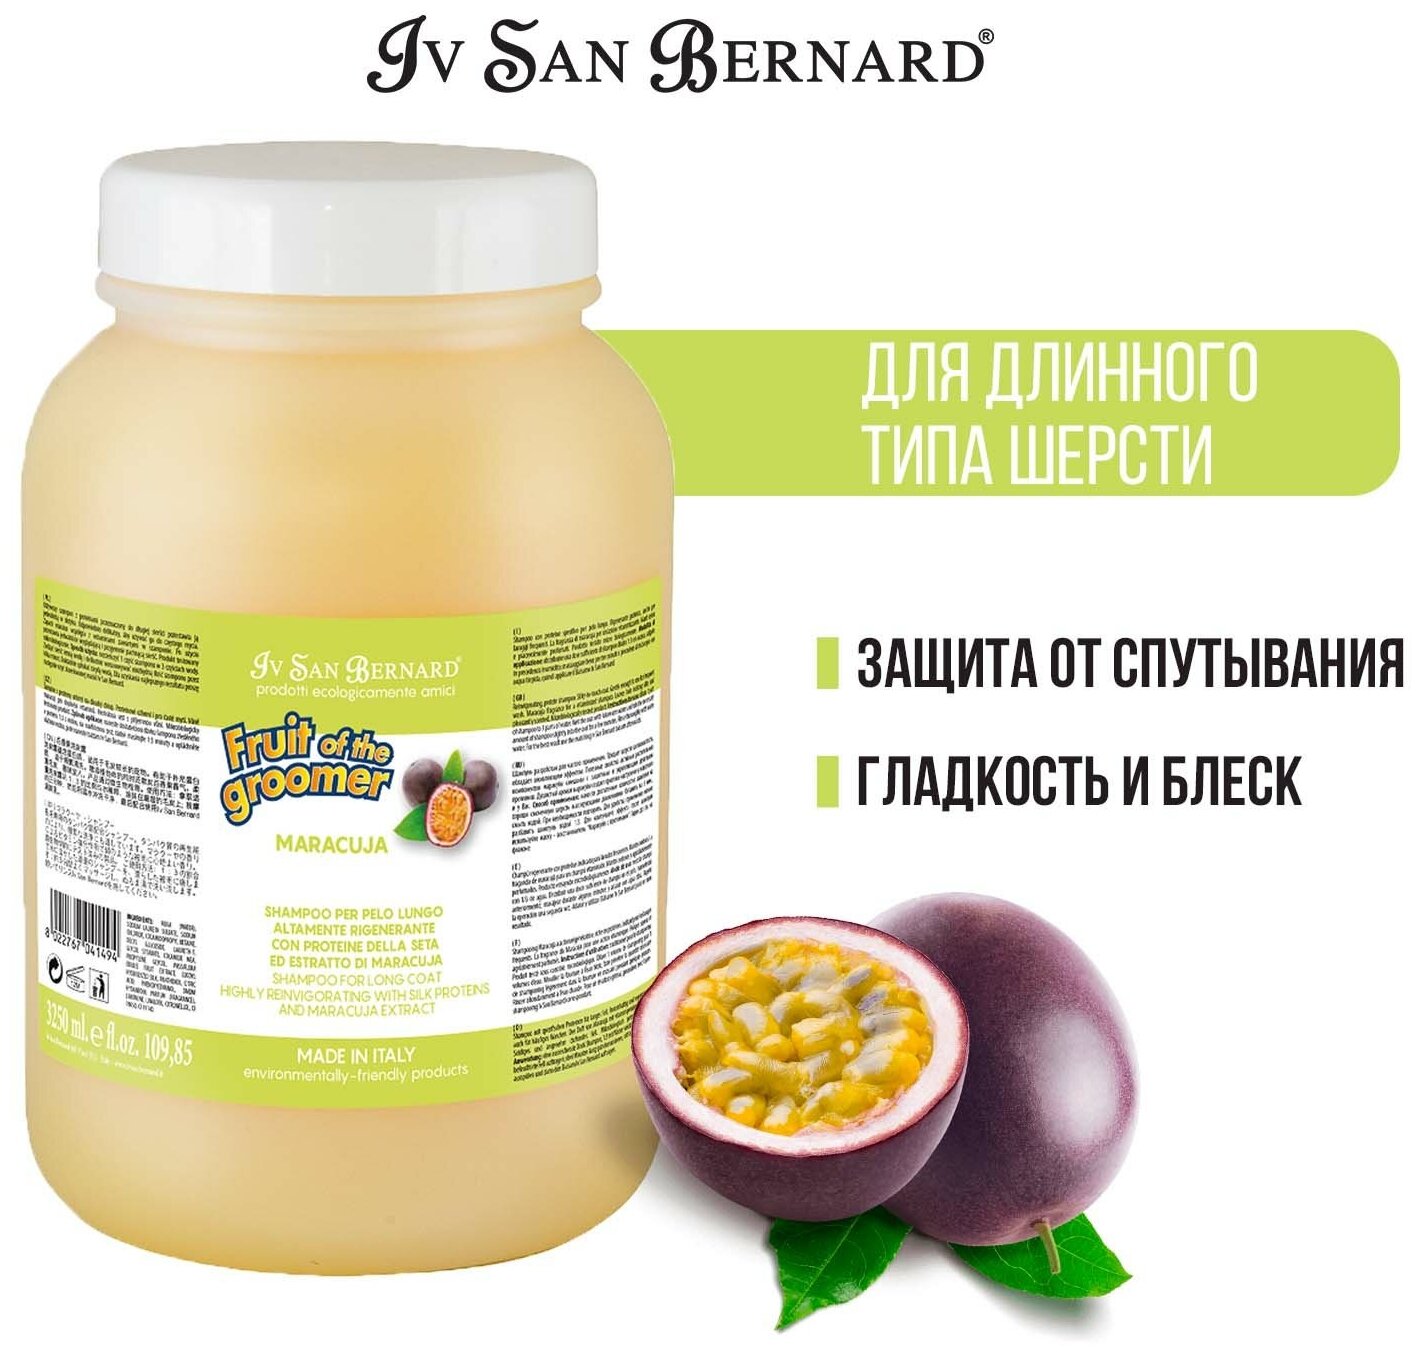 Iv San Bernard Fruit of the Groomer Maracuja Шампунь для длинной шерсти с протеинами 3,25 л